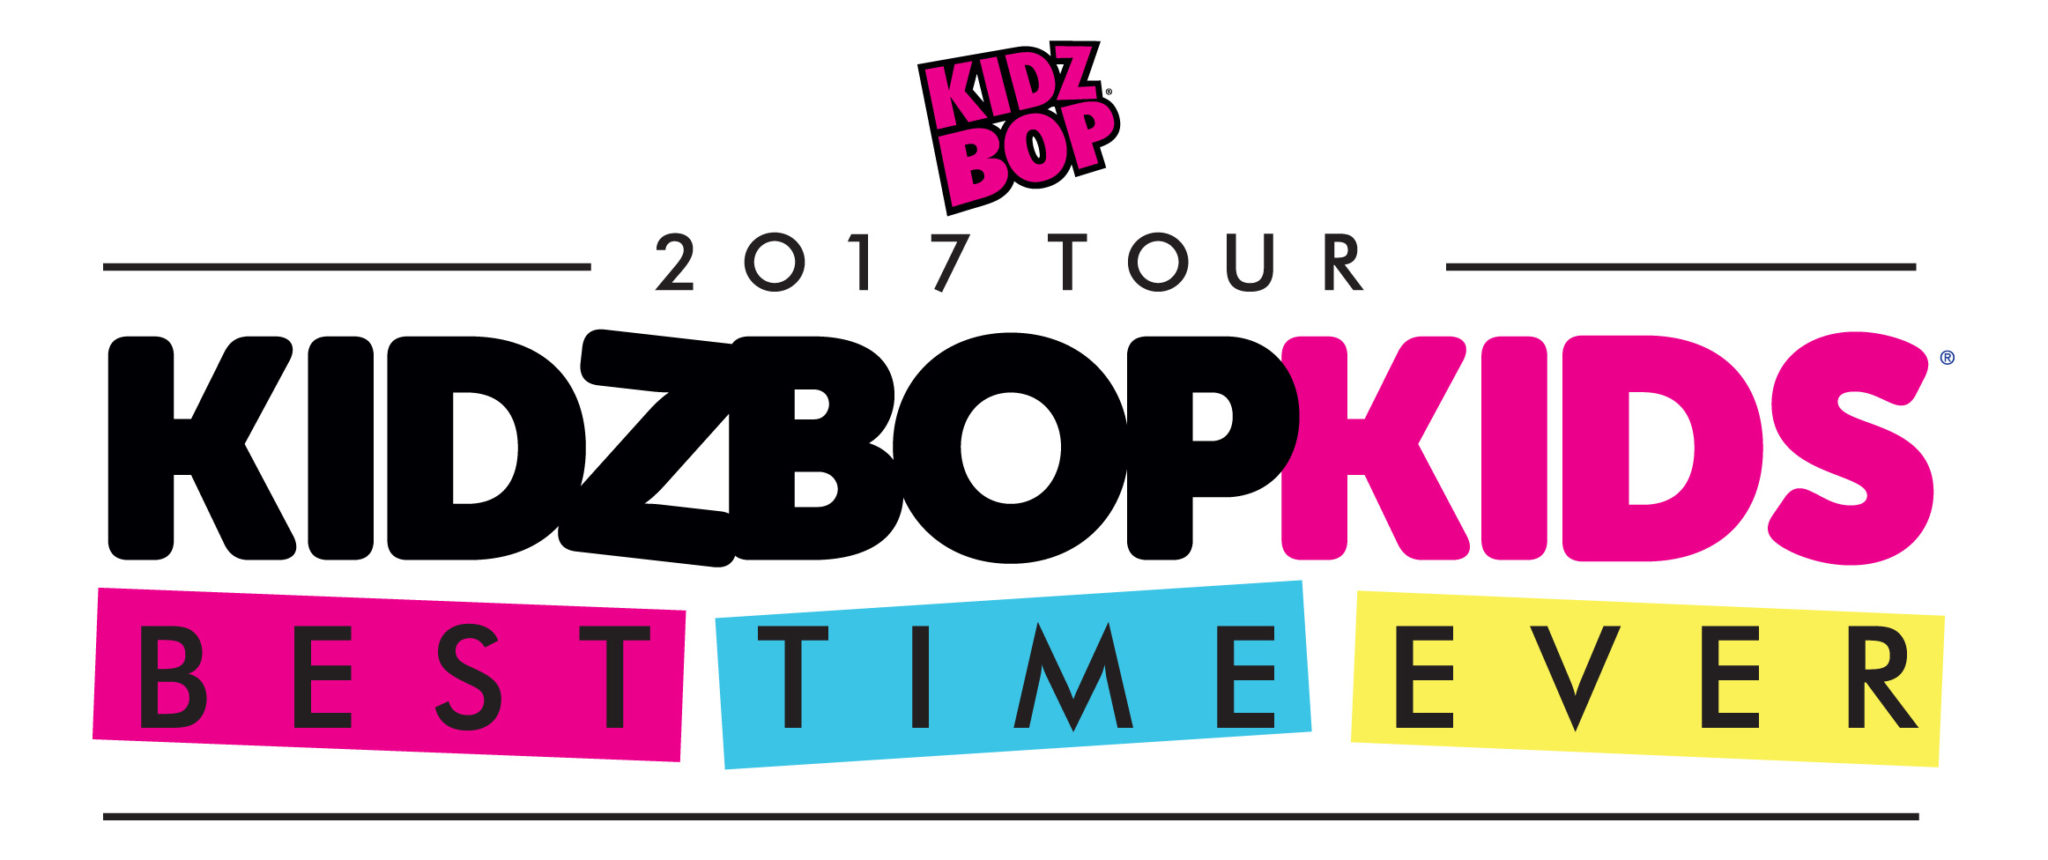 KIDZ BOP Kids to Rock Legoland Florida Resort April 28-30